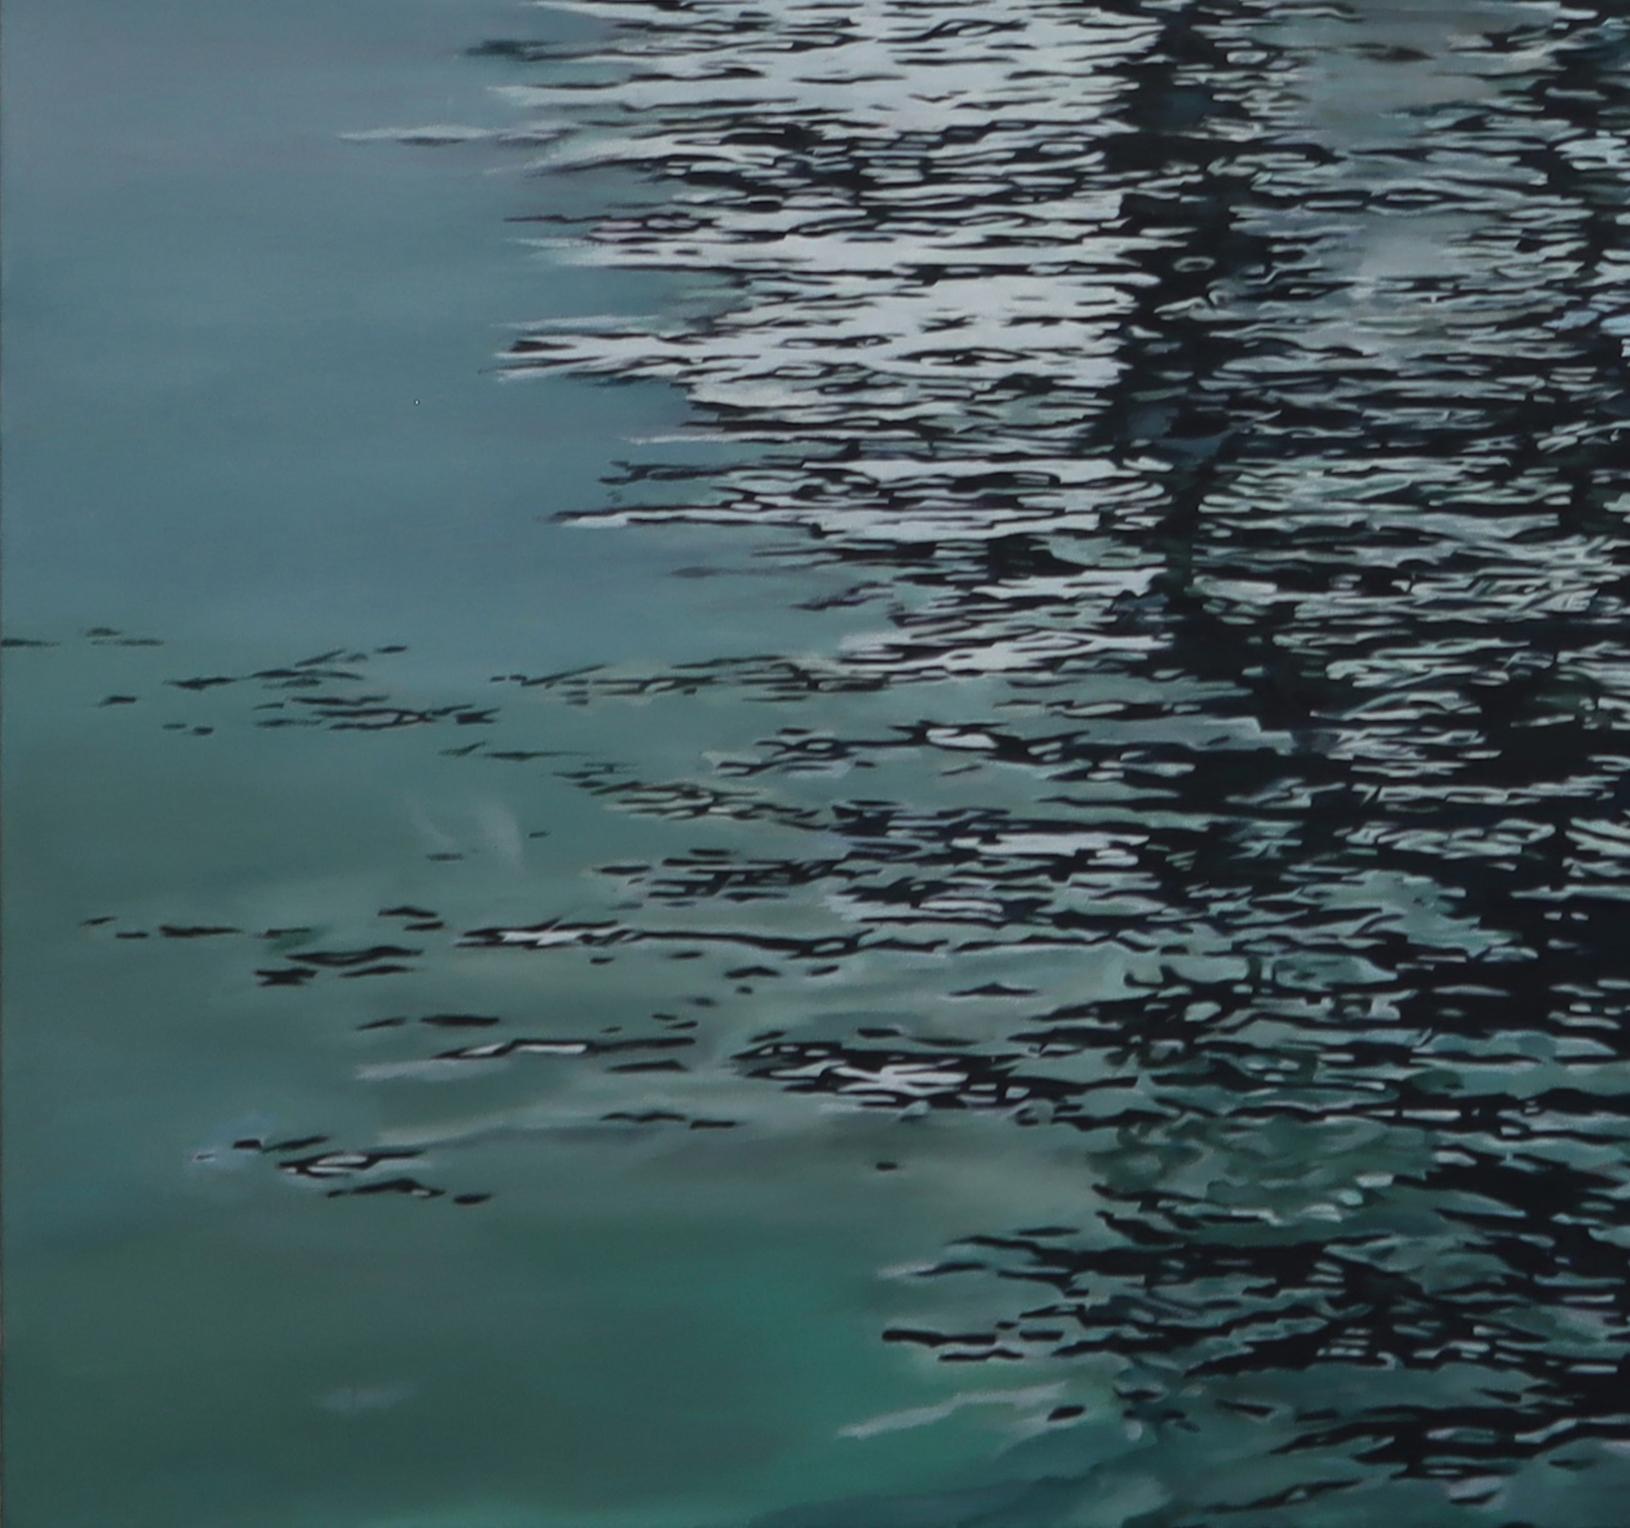 BAY BRIDGE - Contemporary Realism / South Korean Artist / California Water Scene For Sale 1